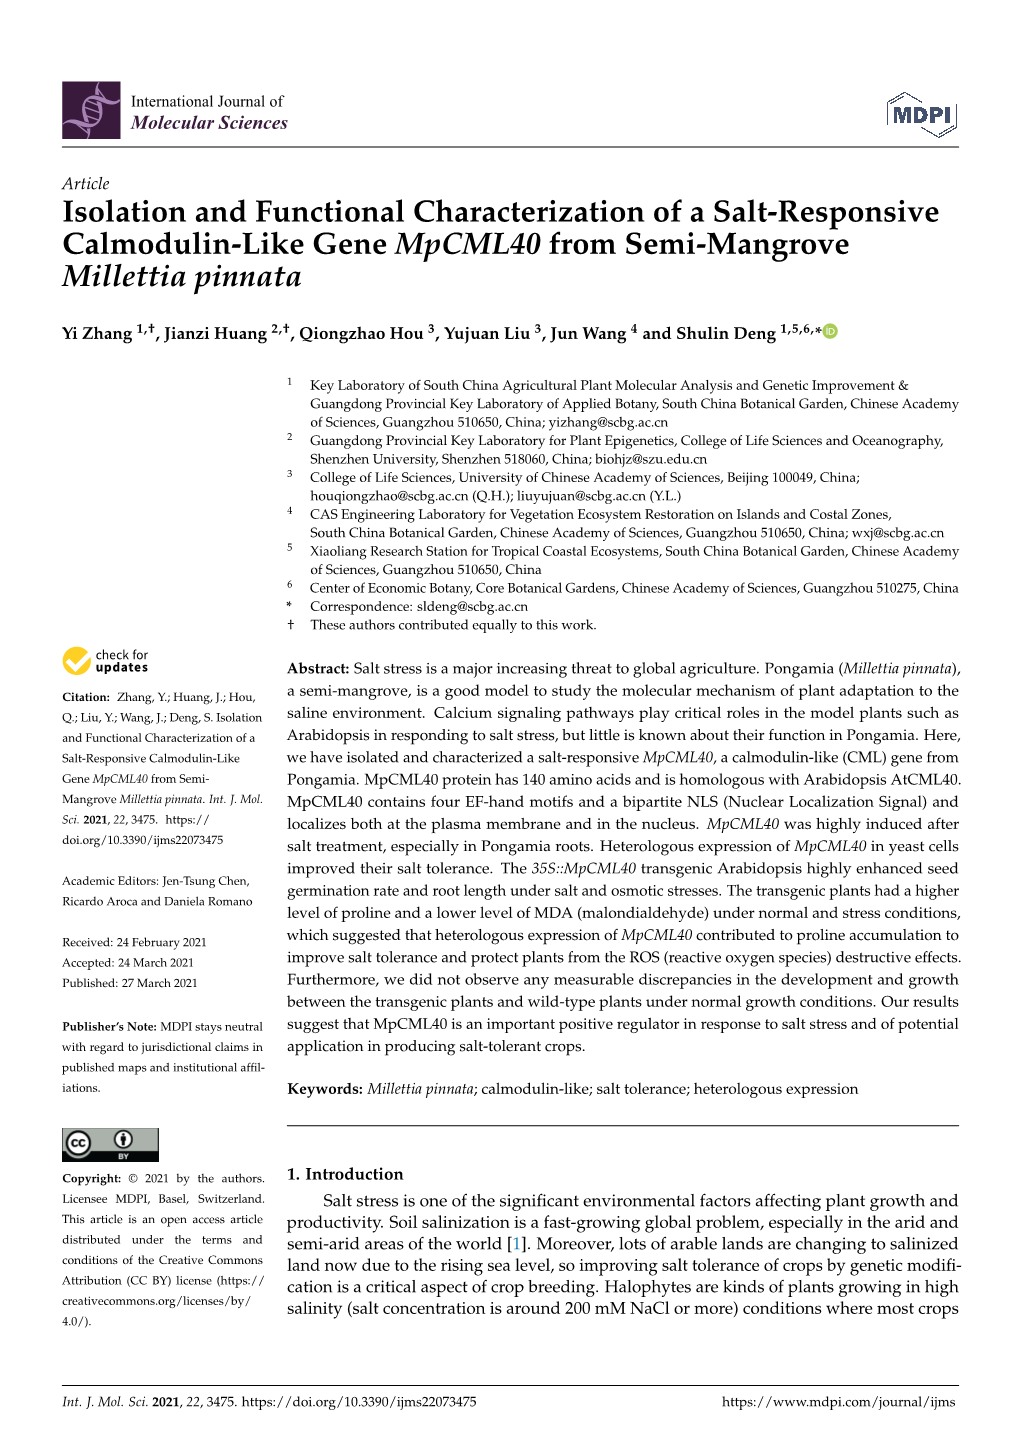 Isolation and Functional Characterization of a Salt-Responsive Calmodulin-Like Gene Mpcml40 from Semi-Mangrove Millettia Pinnata